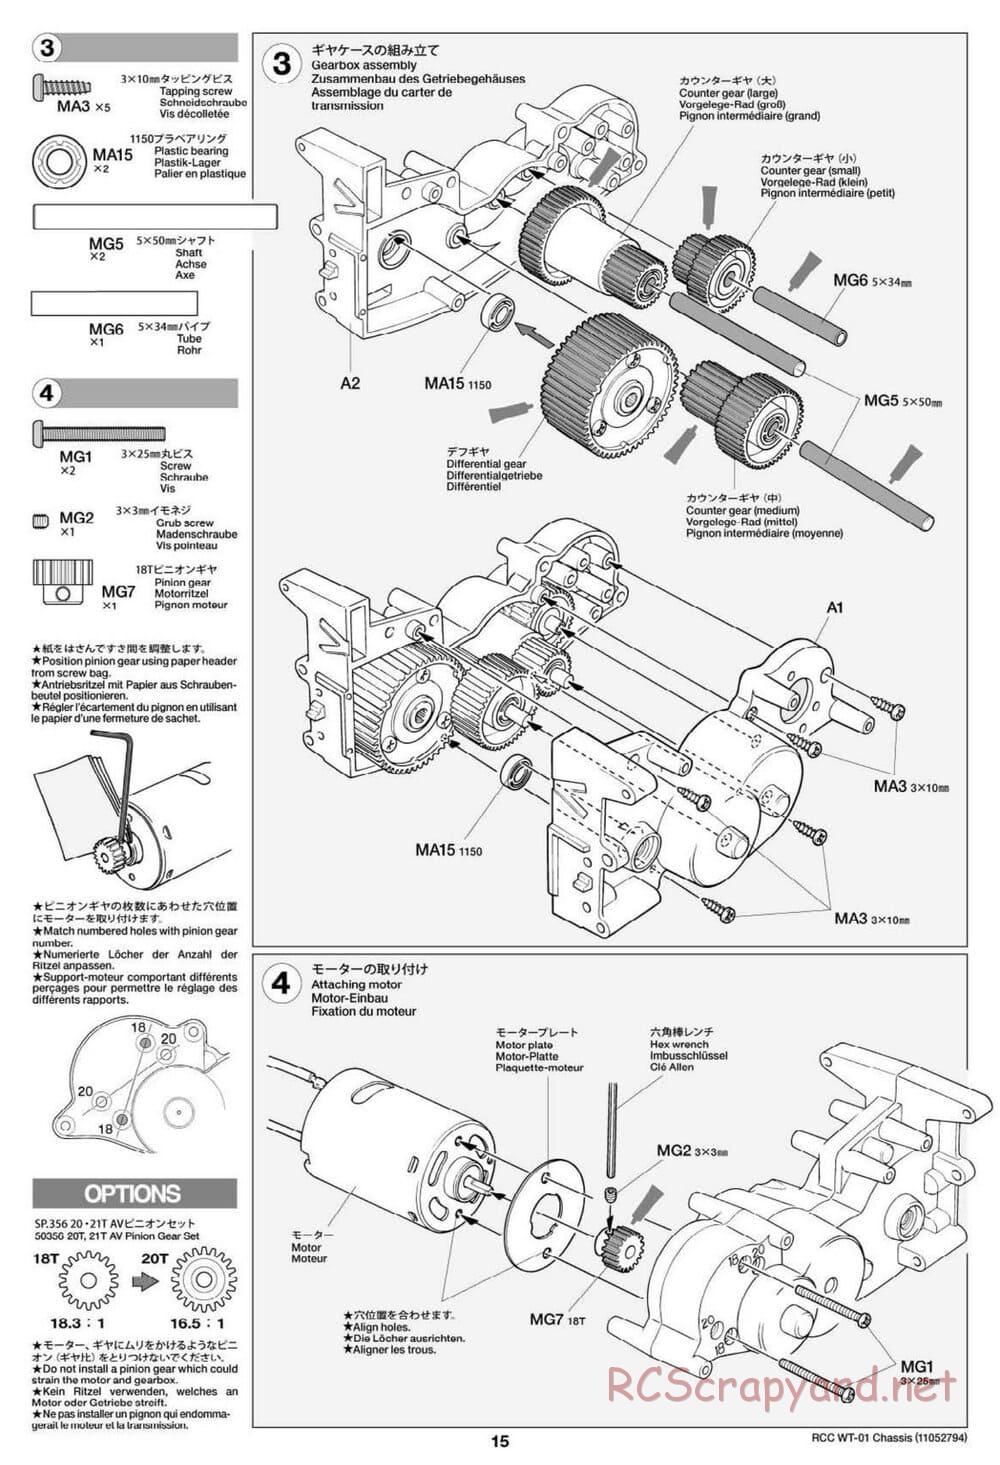 Tamiya - Mud Blaster II - WT-01 Chassis - Manual - Page 15